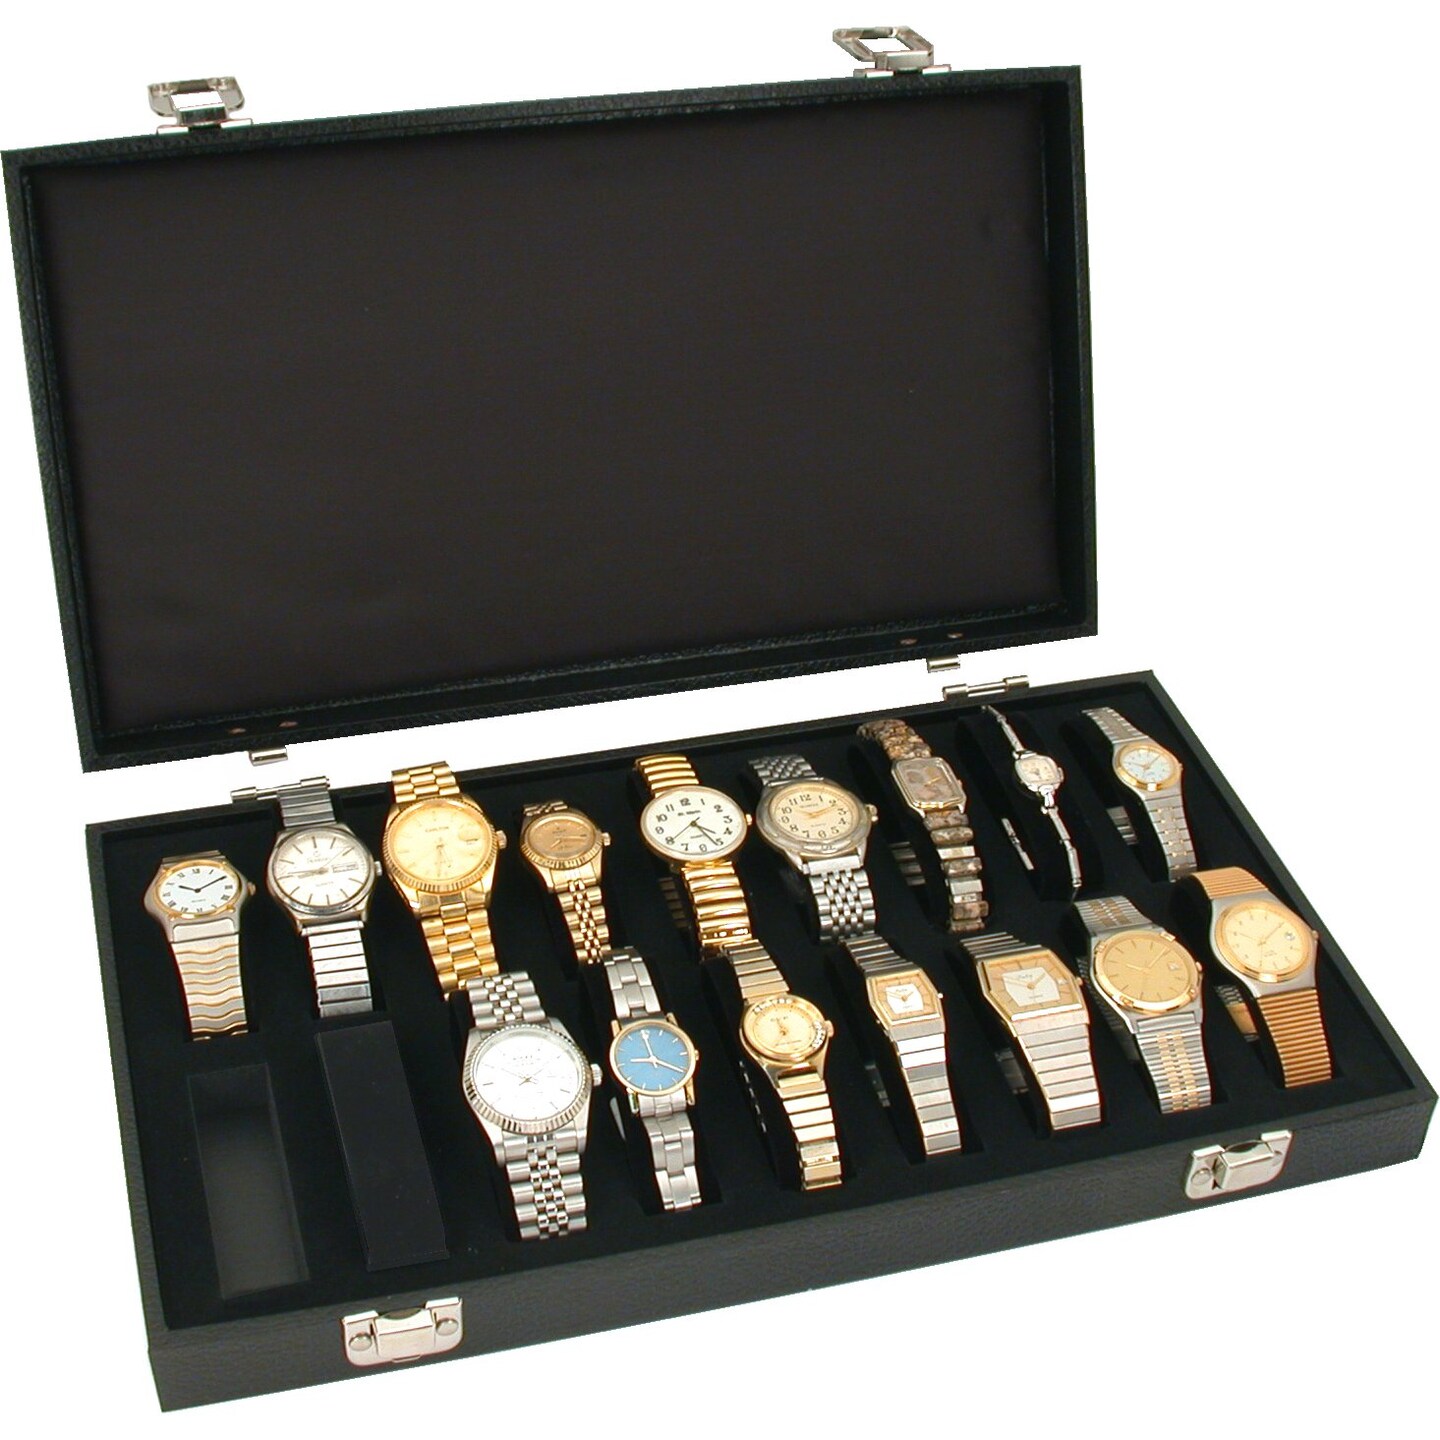 3 18pc Black Watch Travel Trays Showcase Display Case Unit